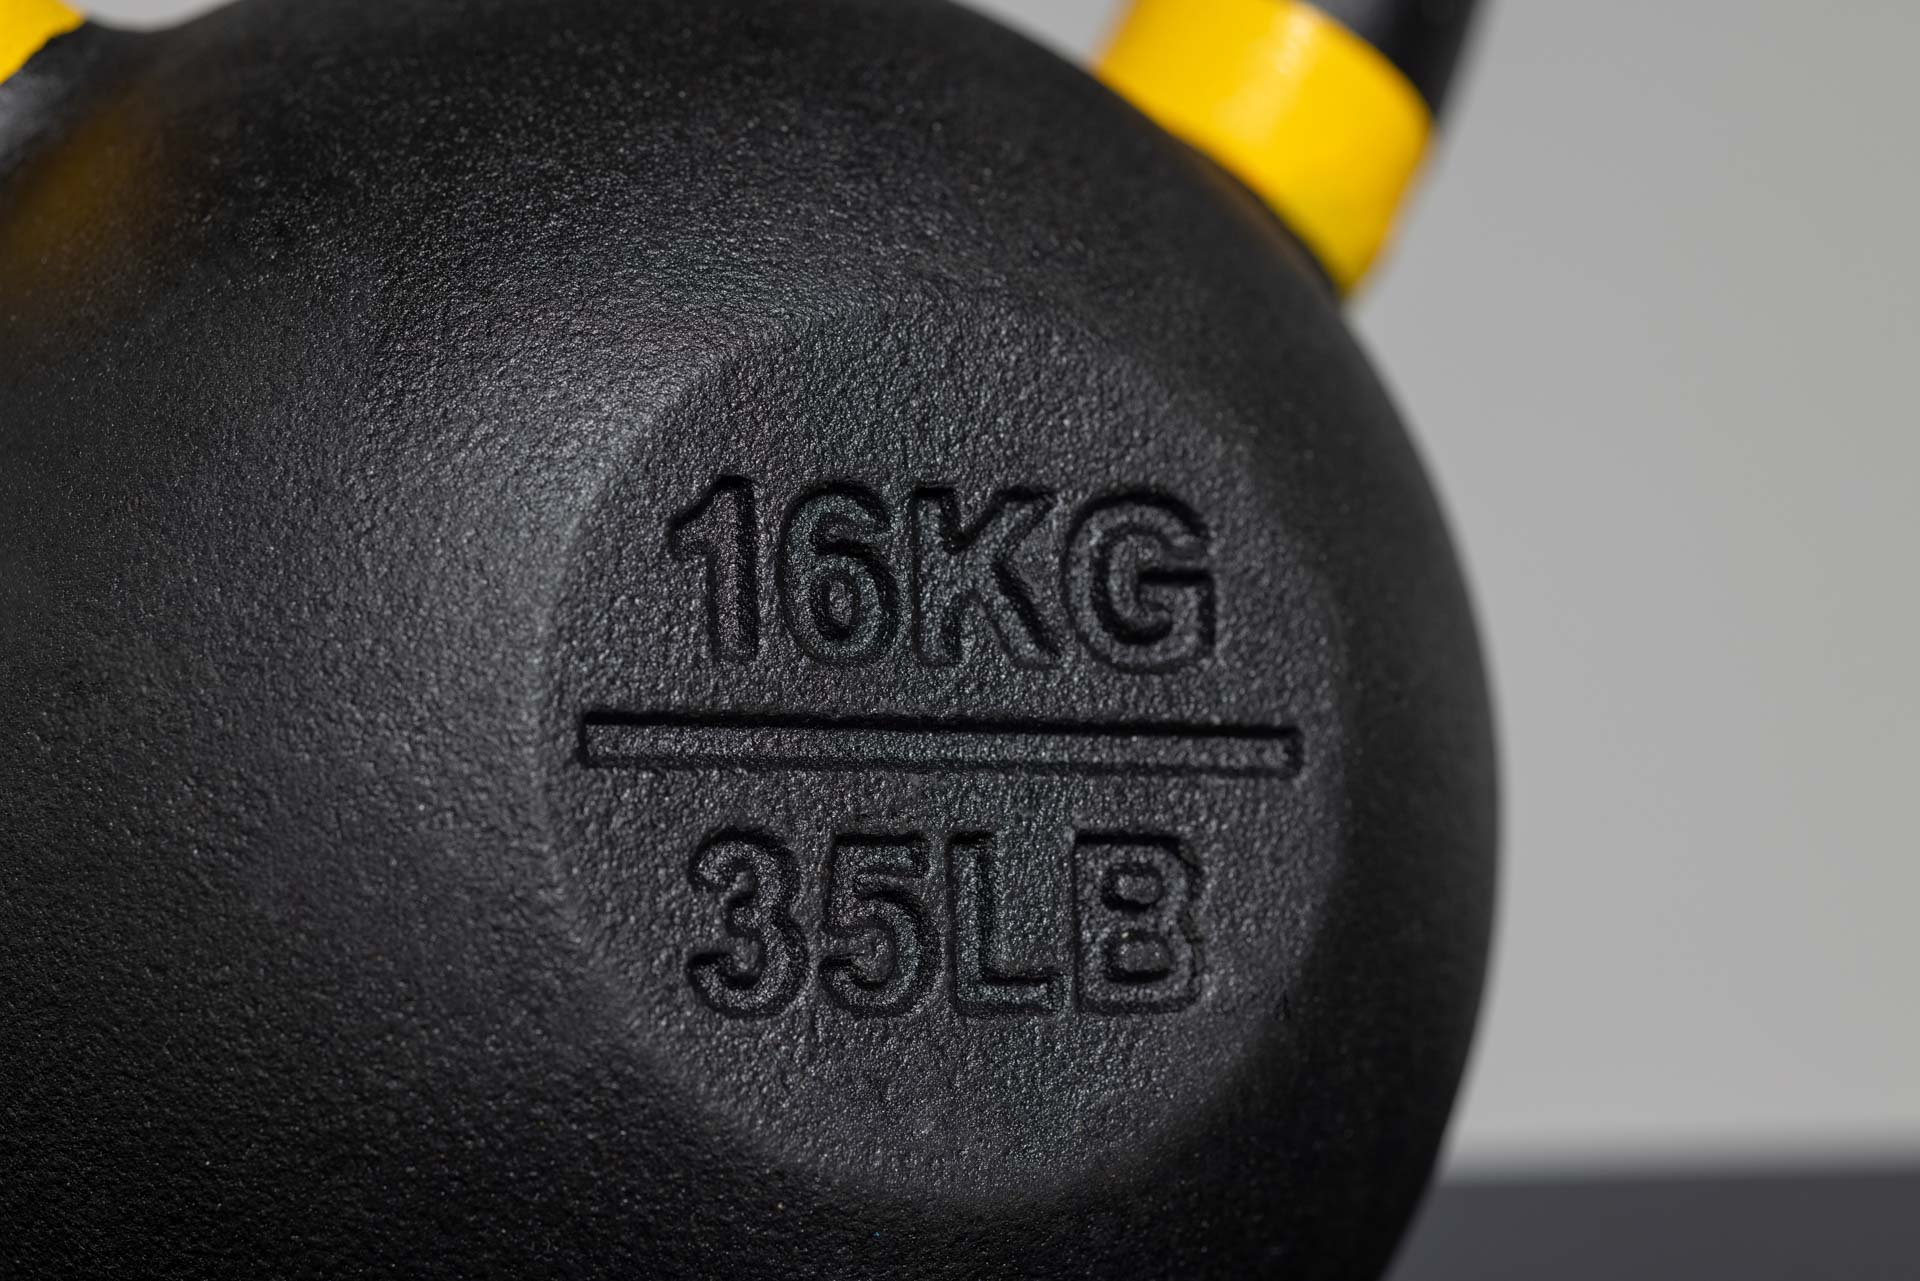 Competition Kettlebell 28KG Rudem Fitness Equipment, 52% OFF